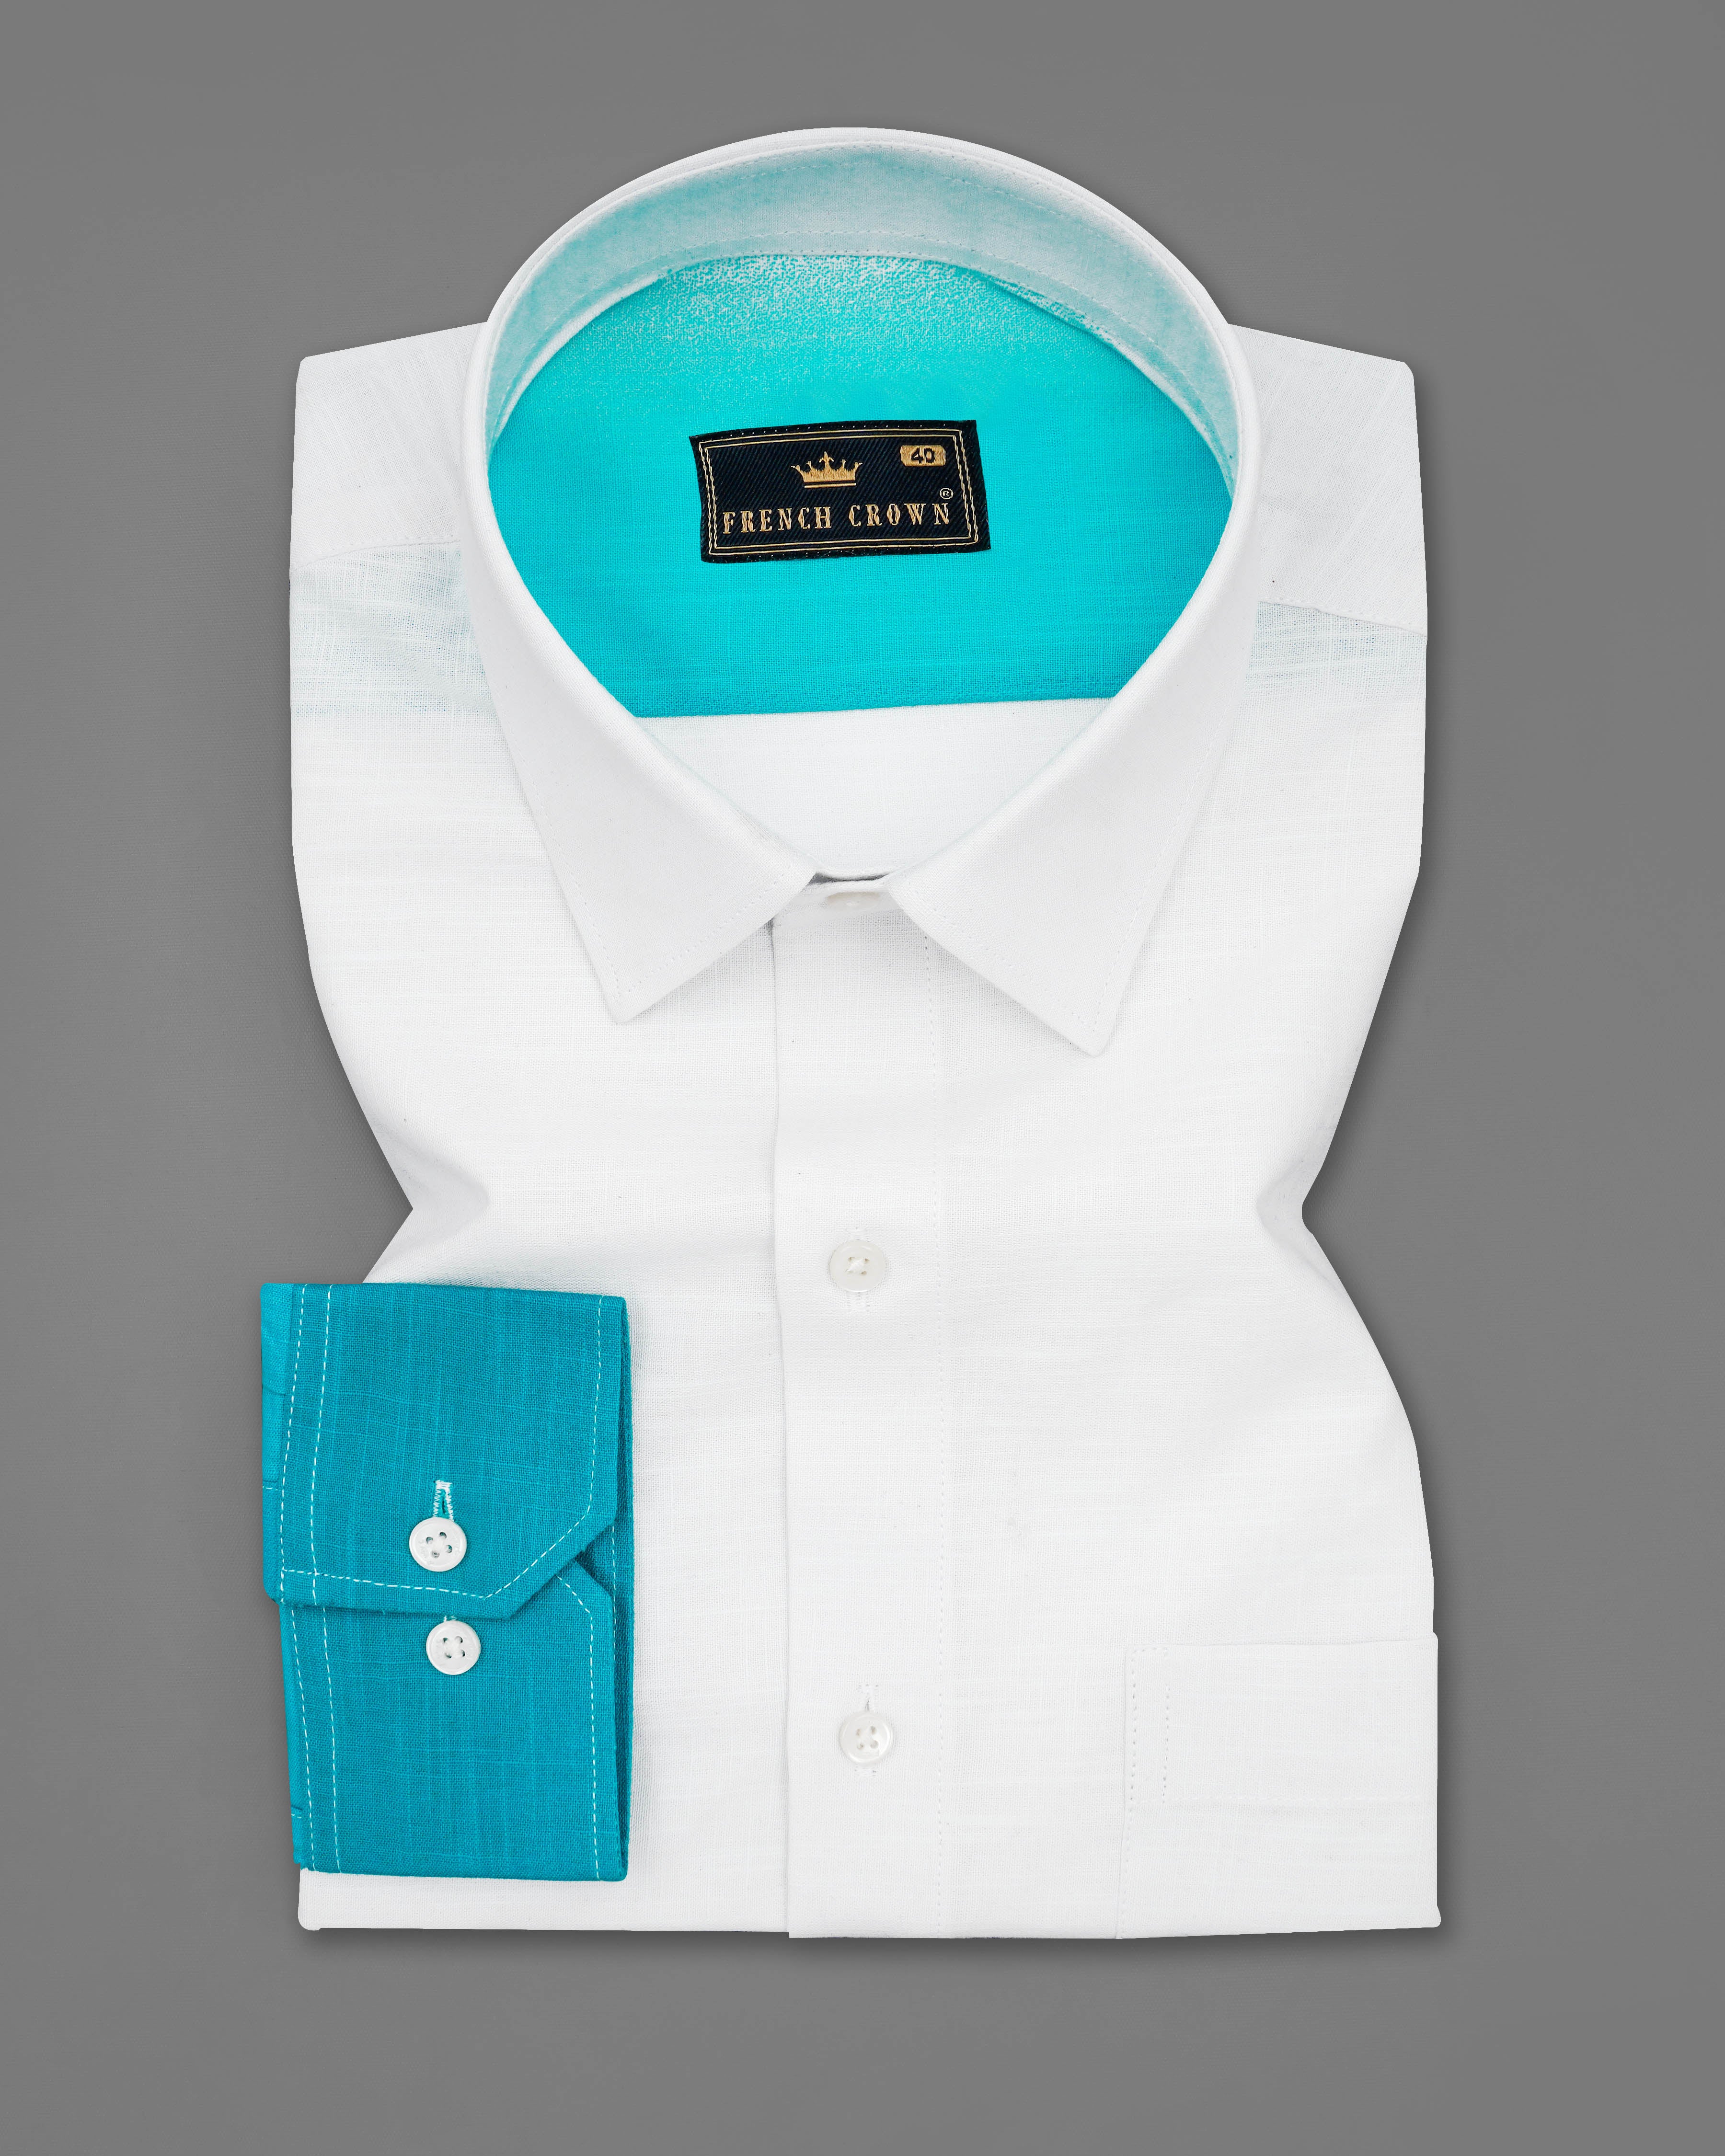 Bright White and Dark Turquoise Blue Chambray Textured Premium Cotton Shirt